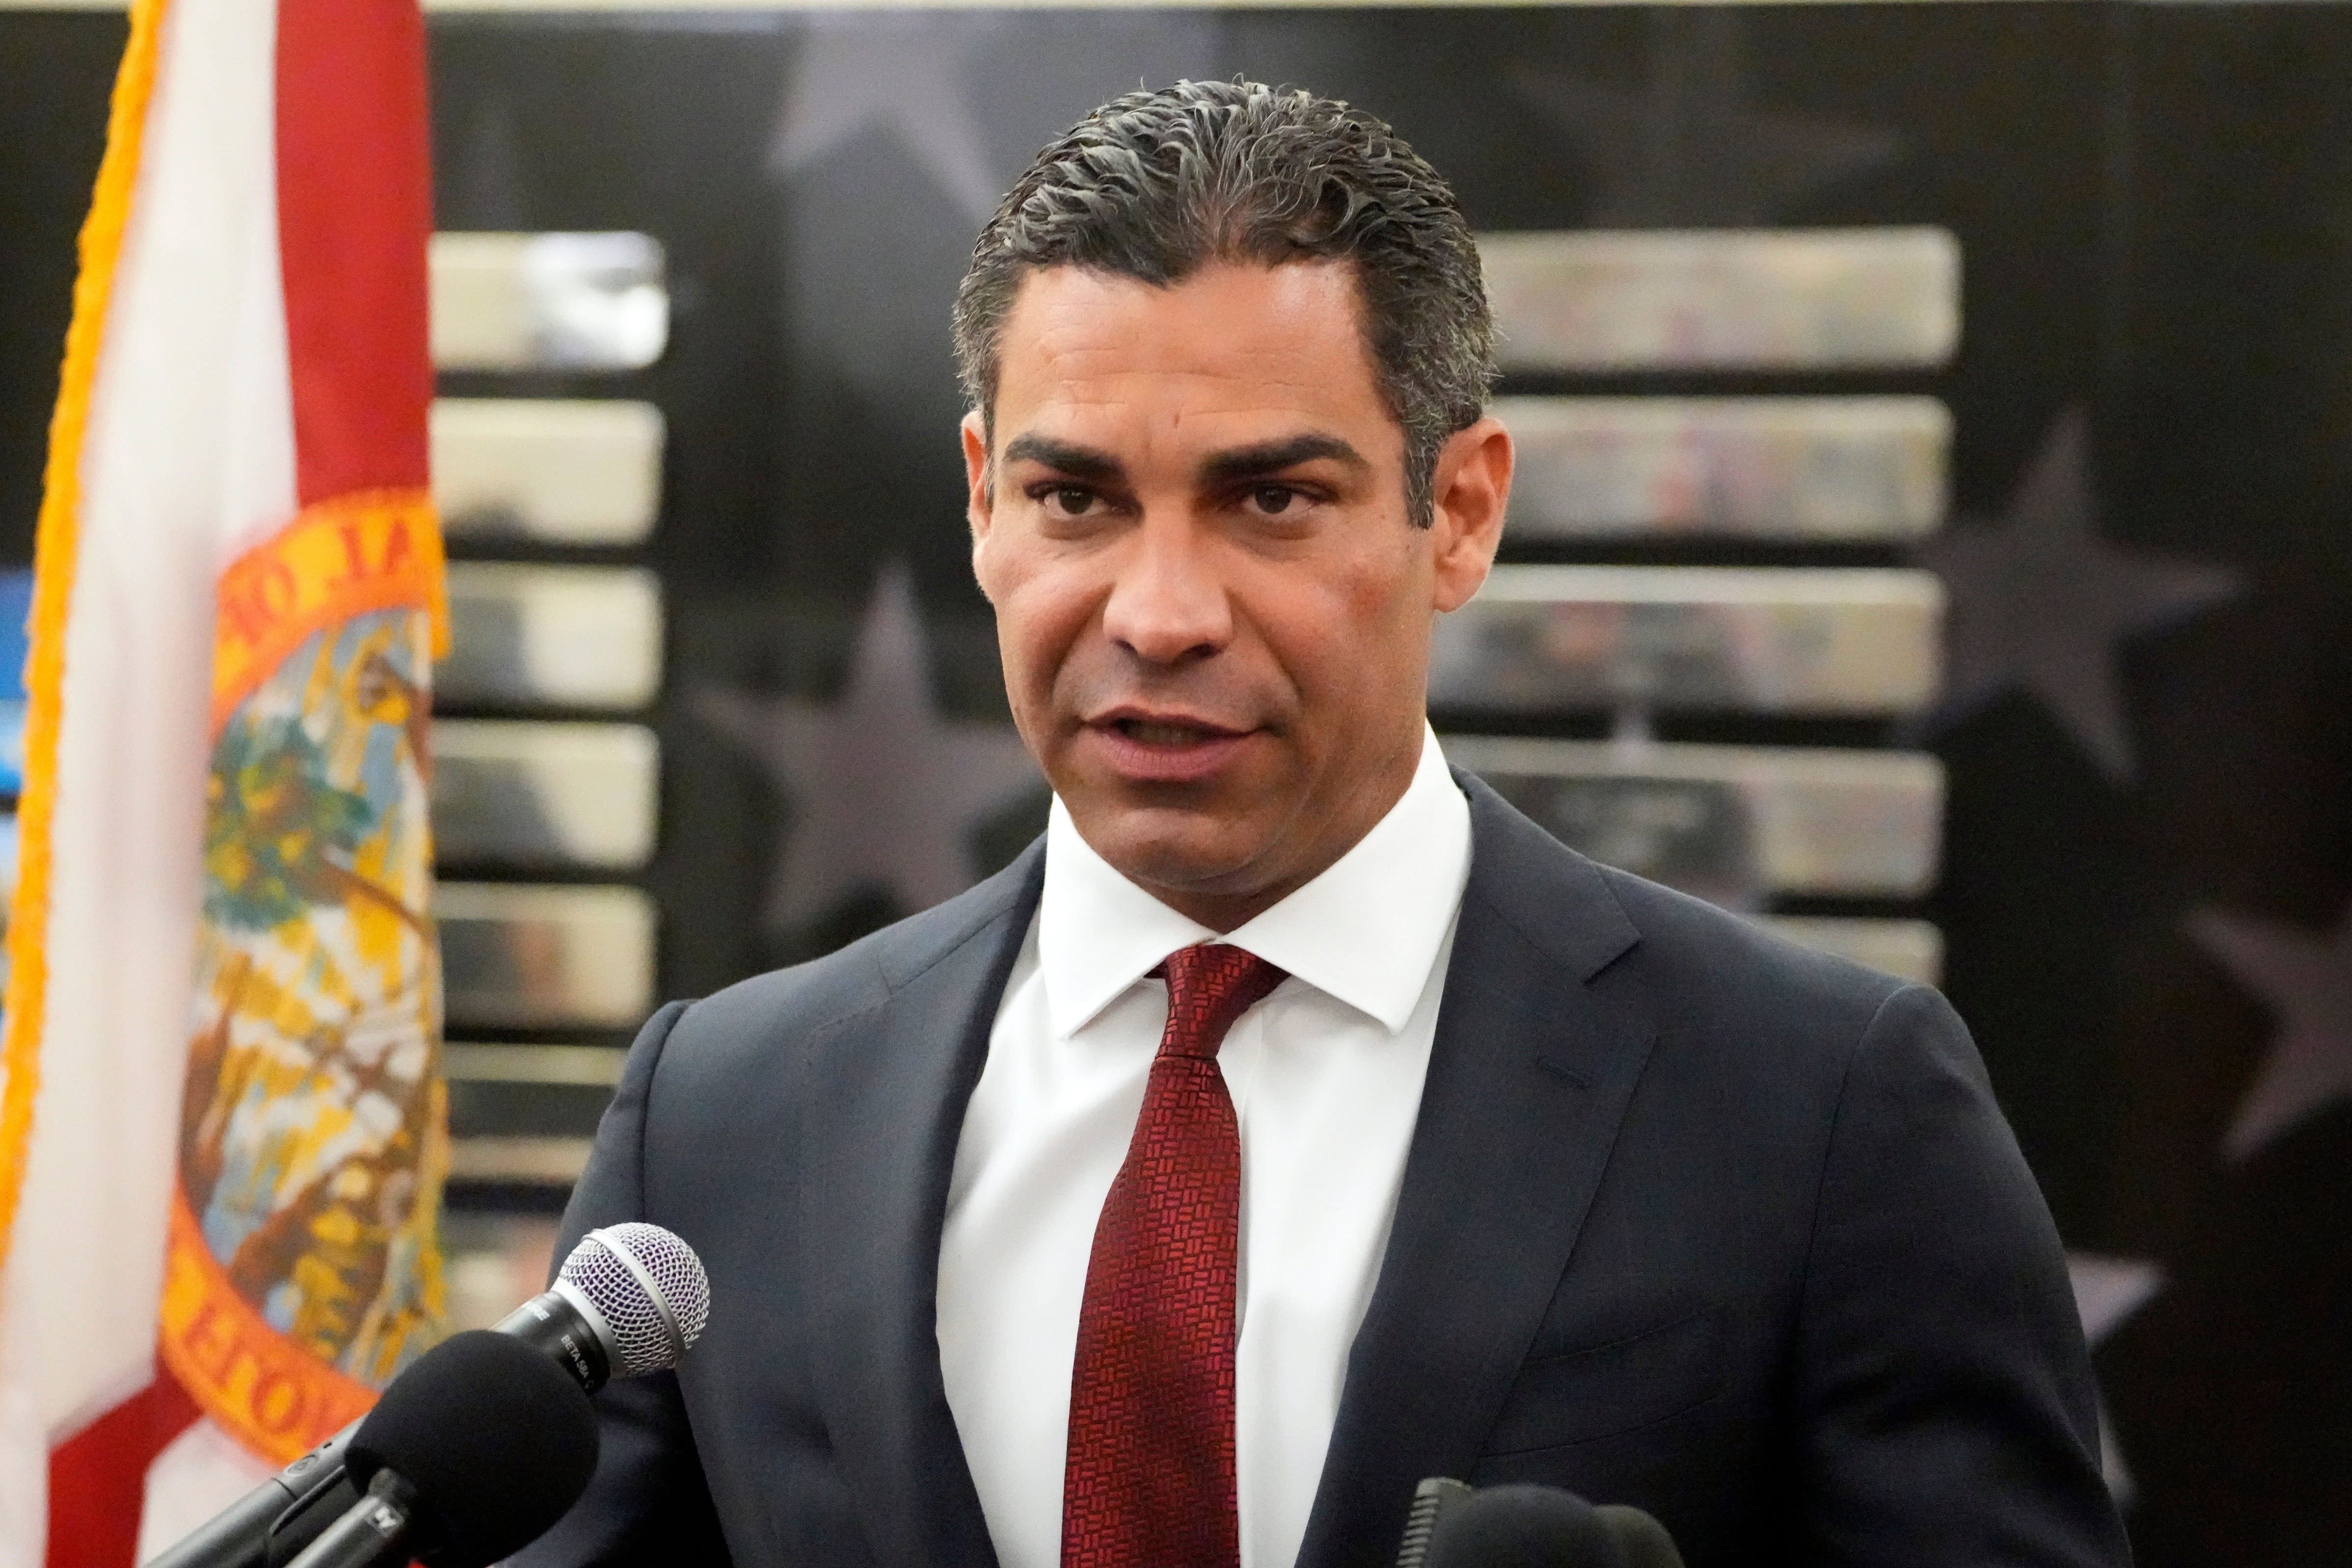 Miami Mayor Francis Suarez is running for president